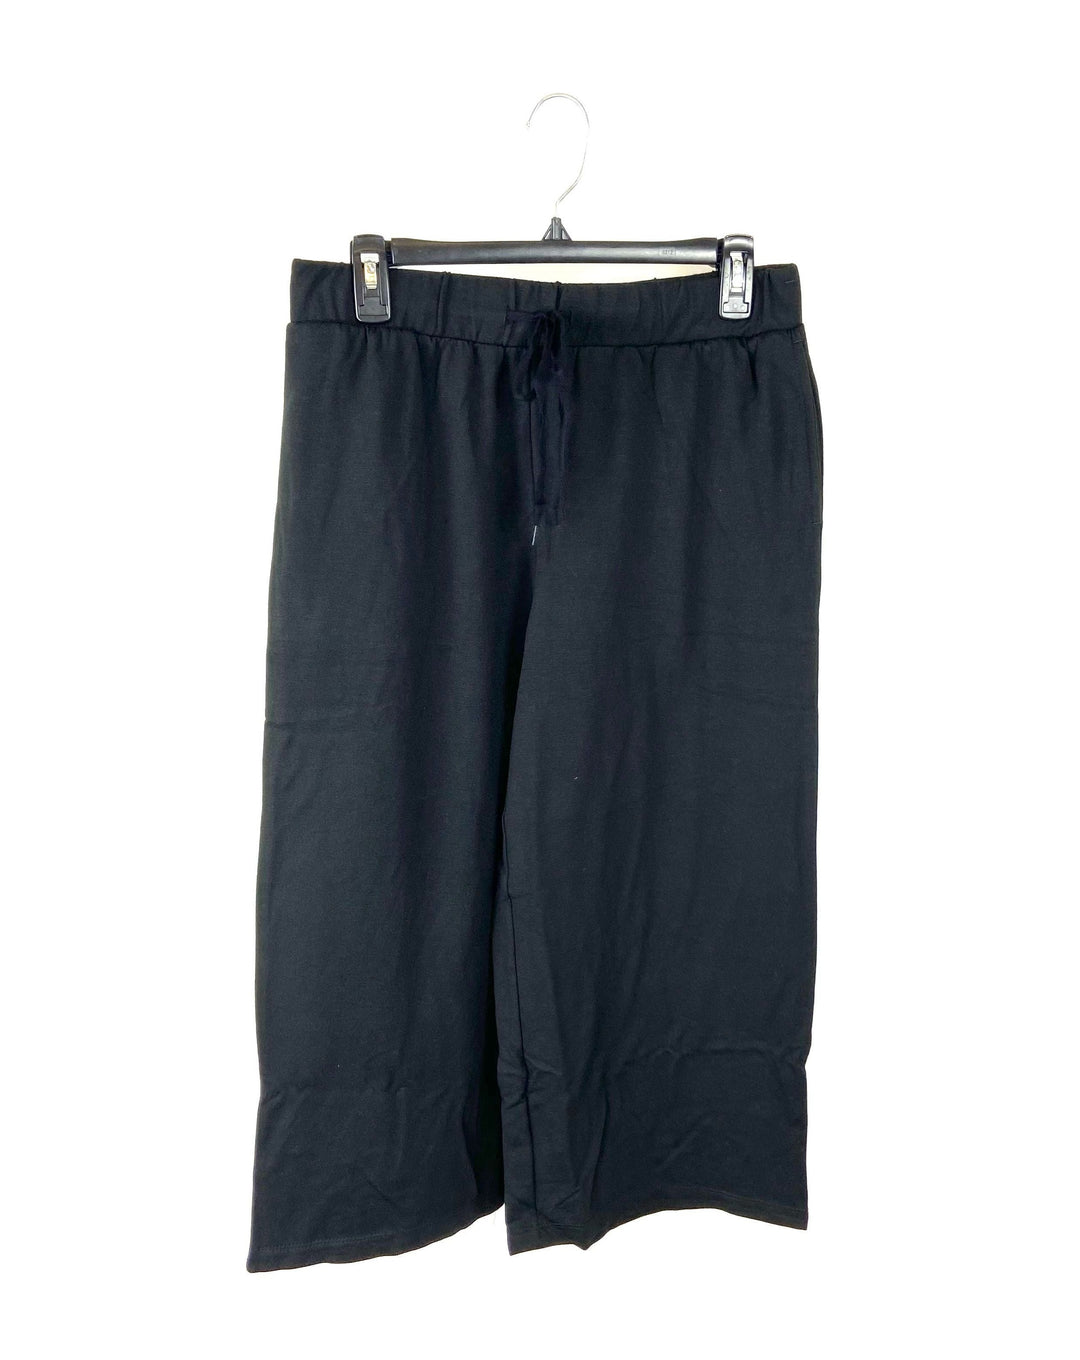 Black Cropped Sweatpants - Size 6/8